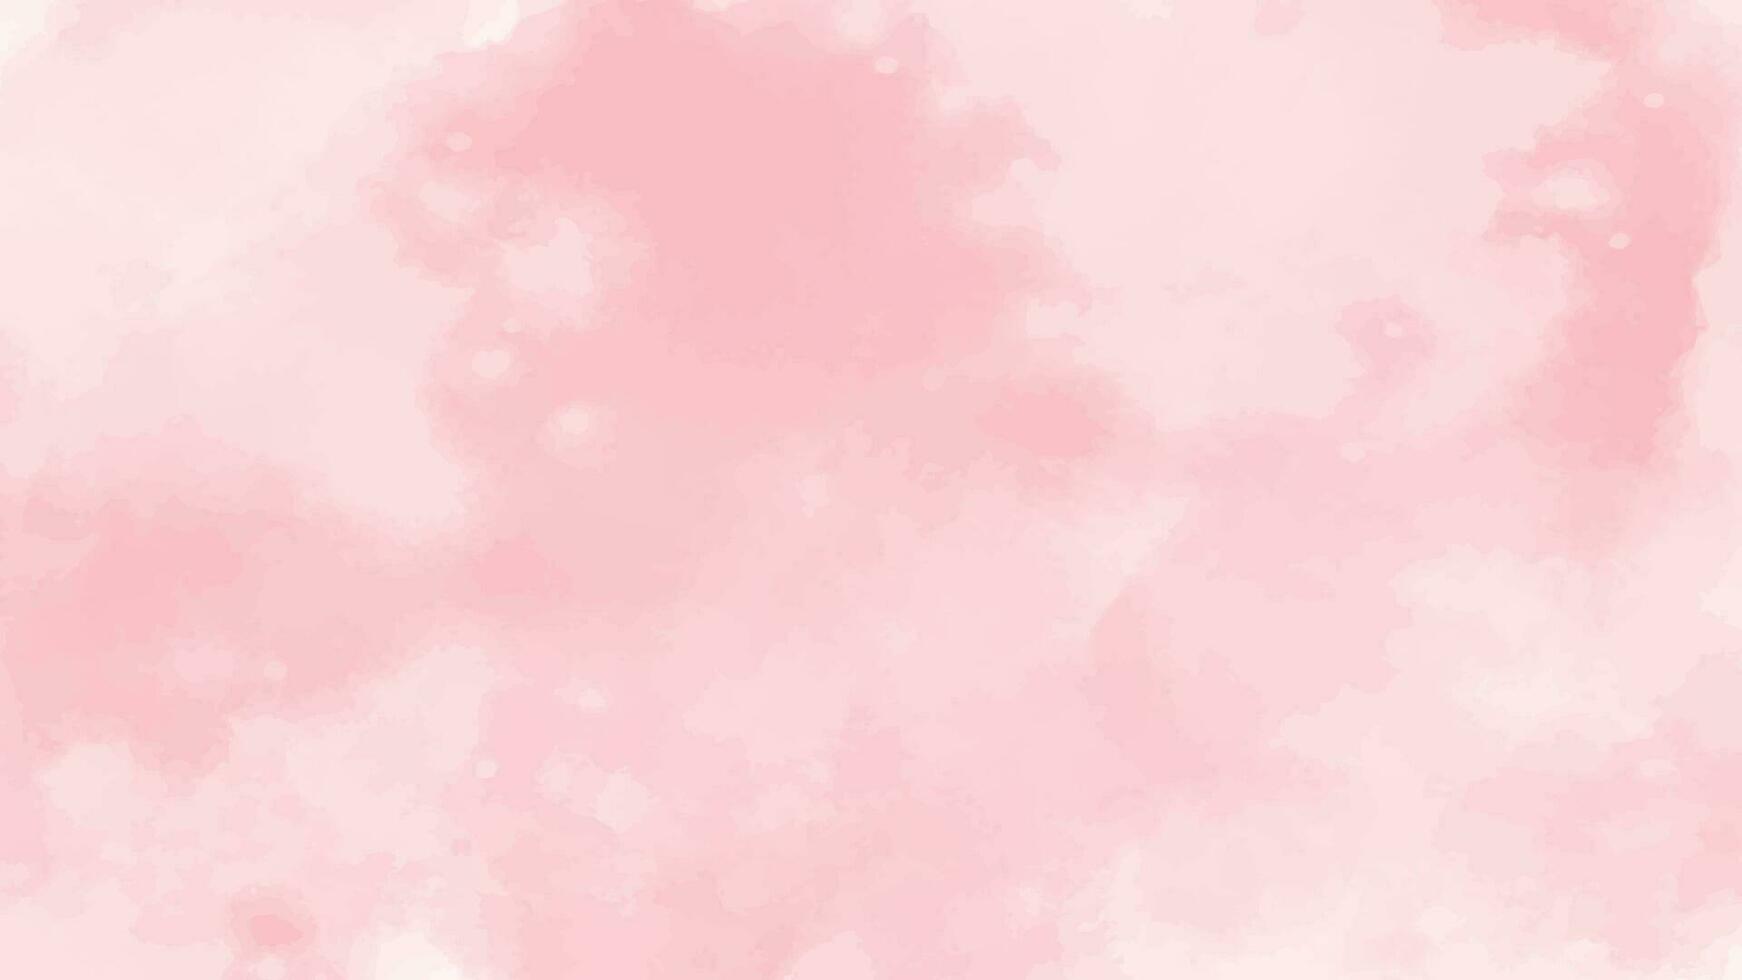 abstract roze waterverf achtergrond. pastel zacht water kleur patroon vector